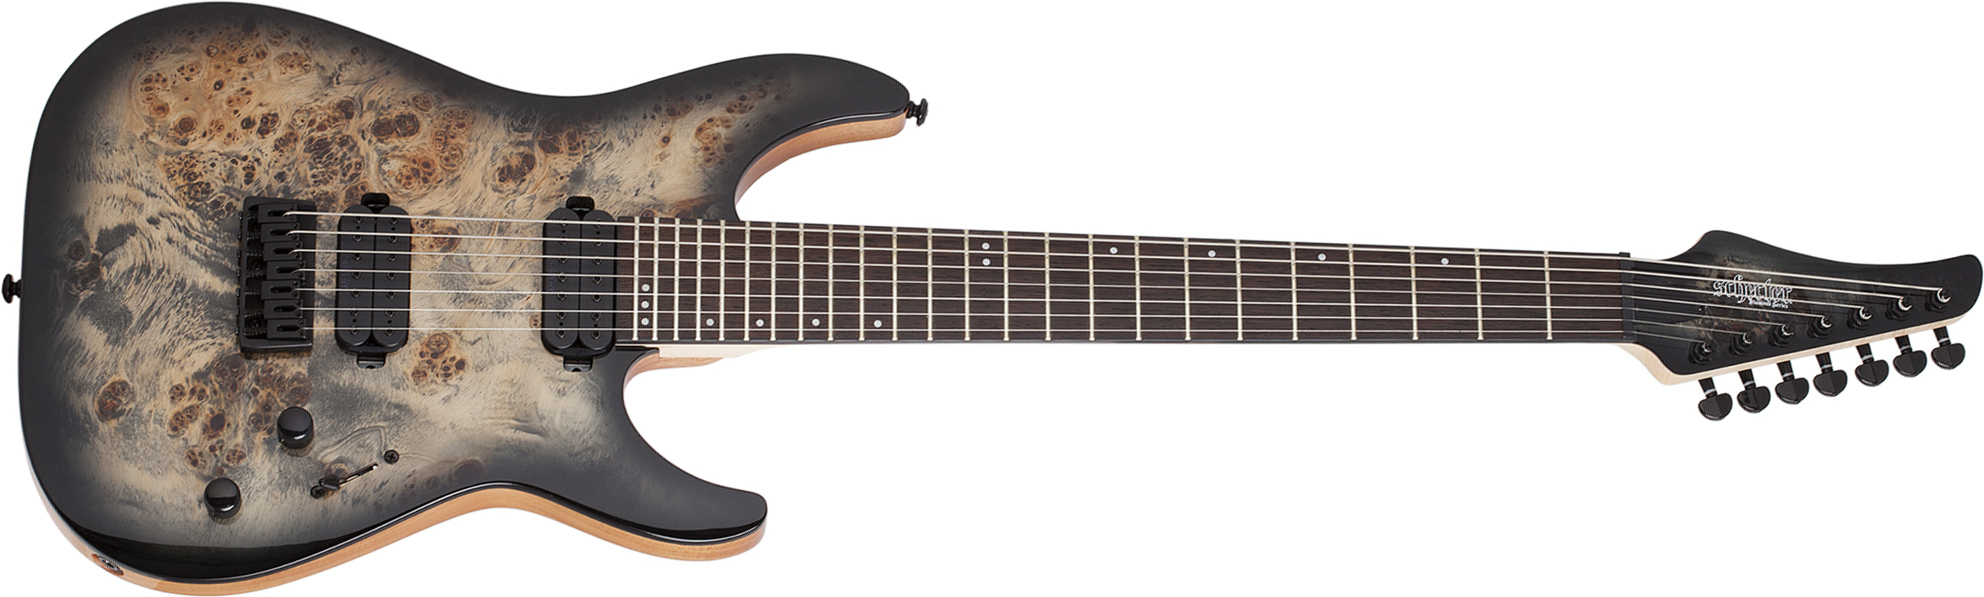 Schecter C-7 Pro 7c 2h Ht Wen - Charcoal Burst - 7 string electric guitar - Main picture